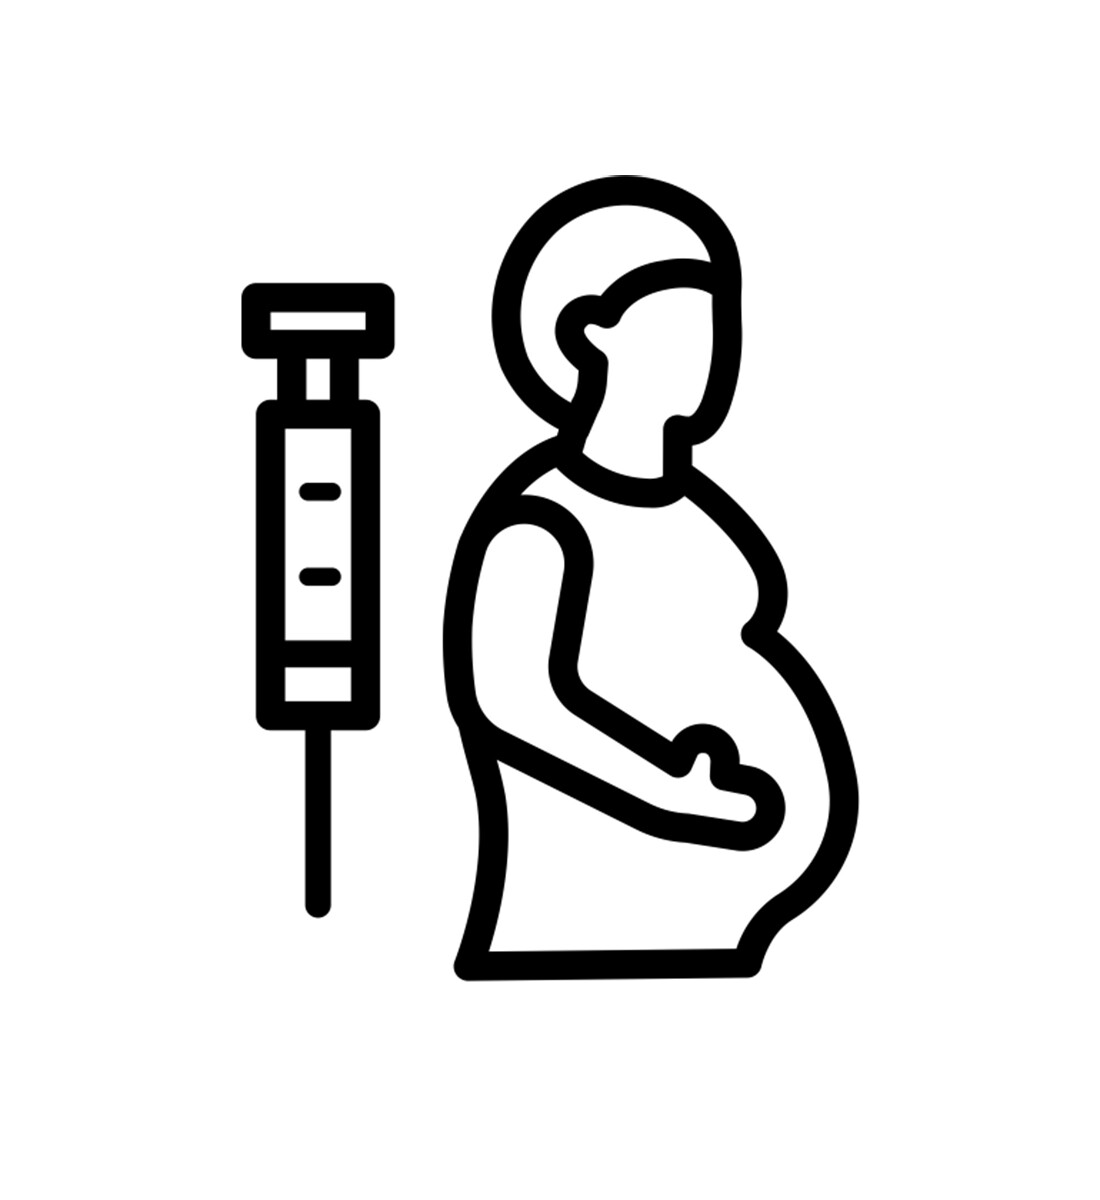 Vaccines Before Pregnancy